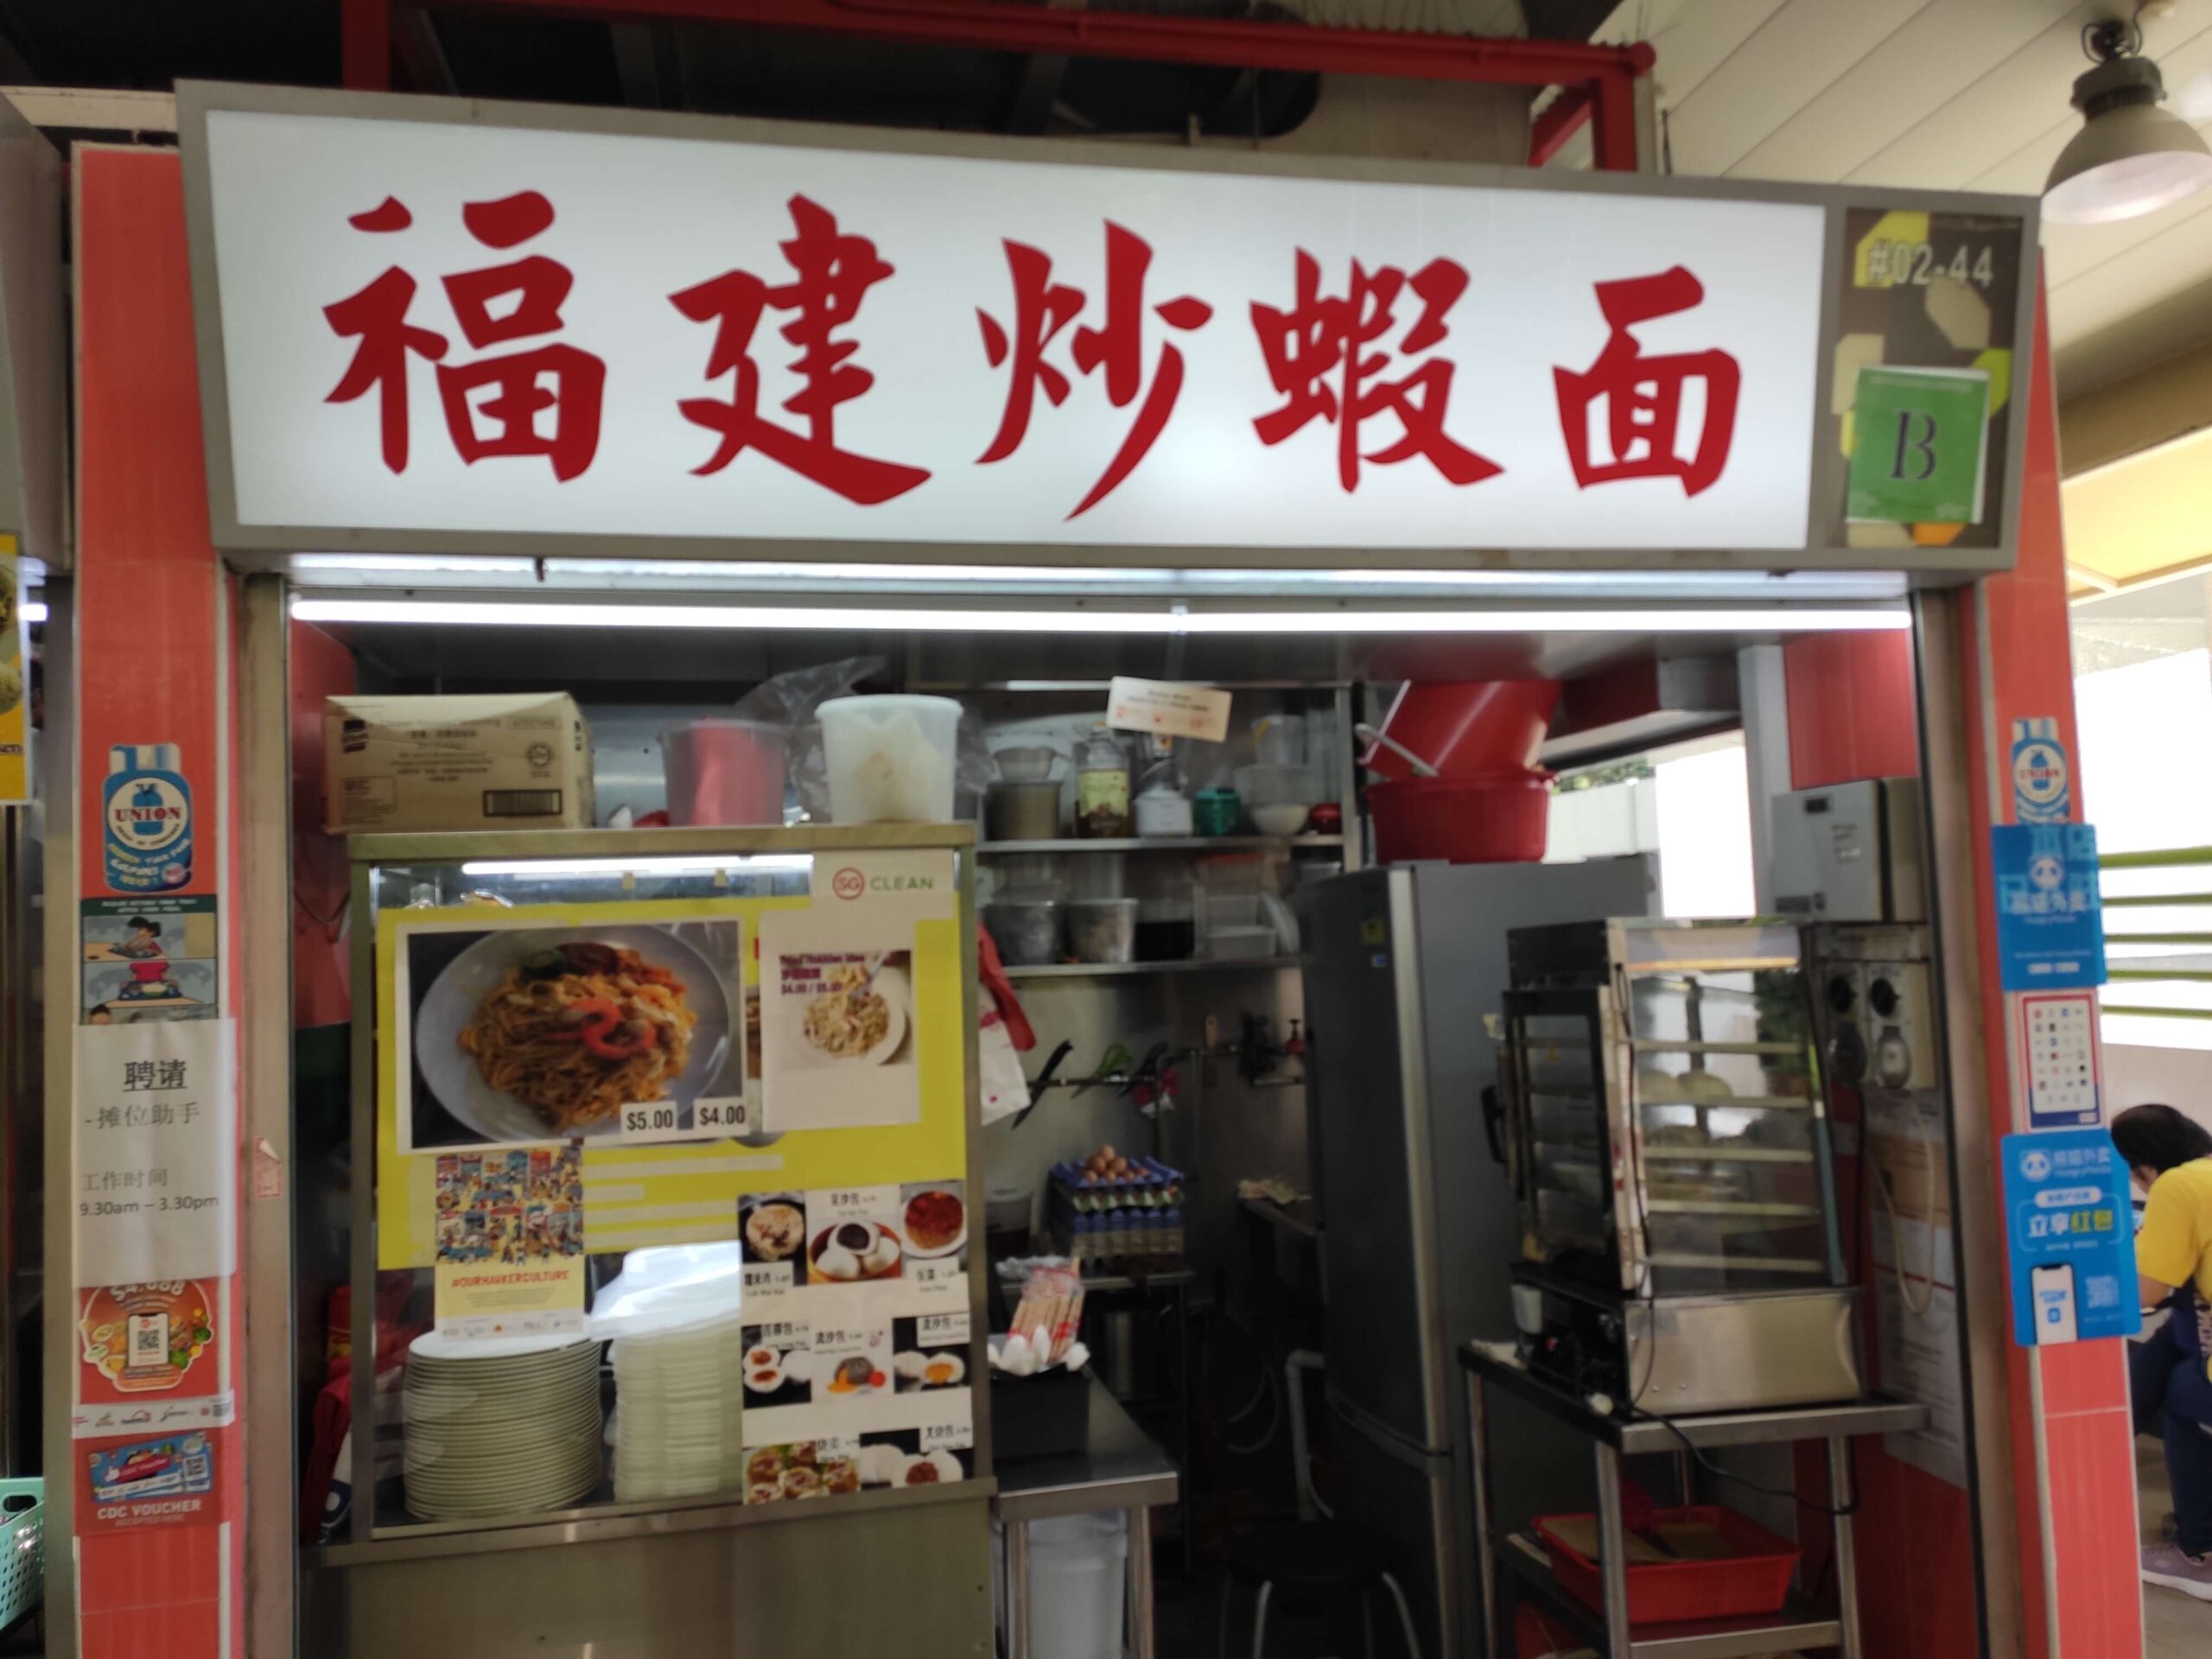 Review: Fried Hokkien Mee - Tanjong Pagar Plaza Food Centre (Singapore